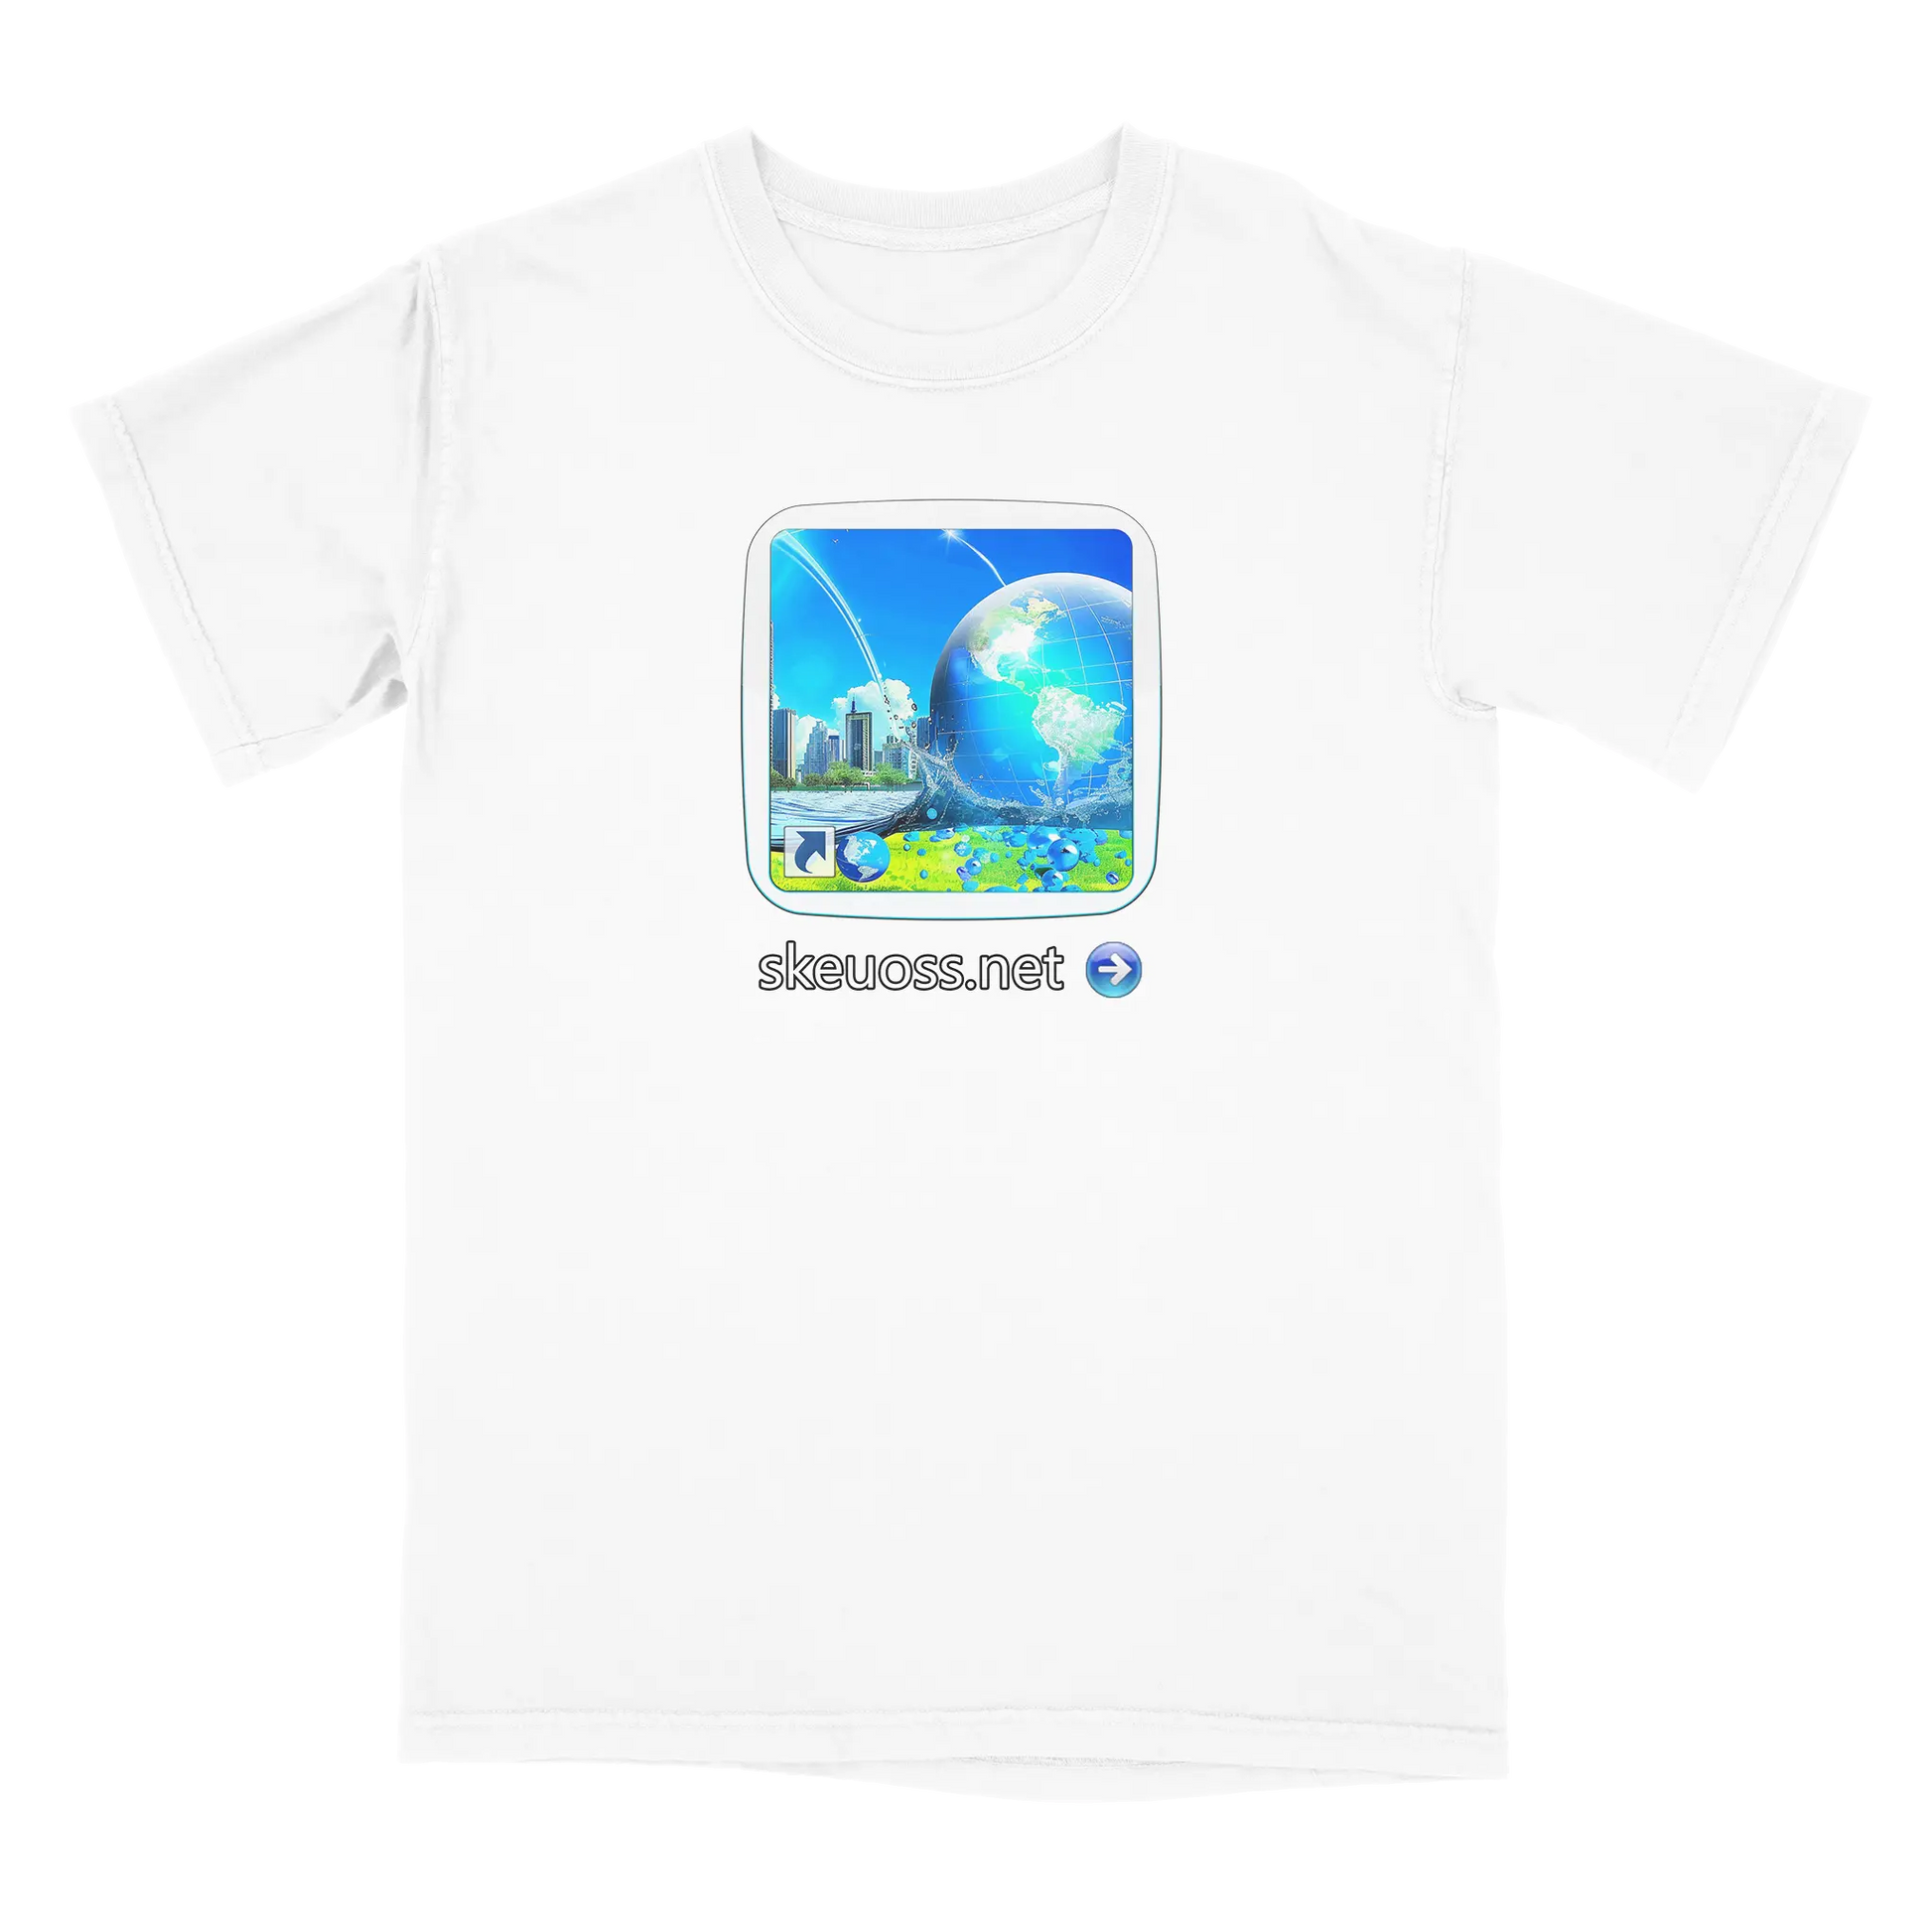 Frutiger Aero T-shirt - User Login Collection - User 369